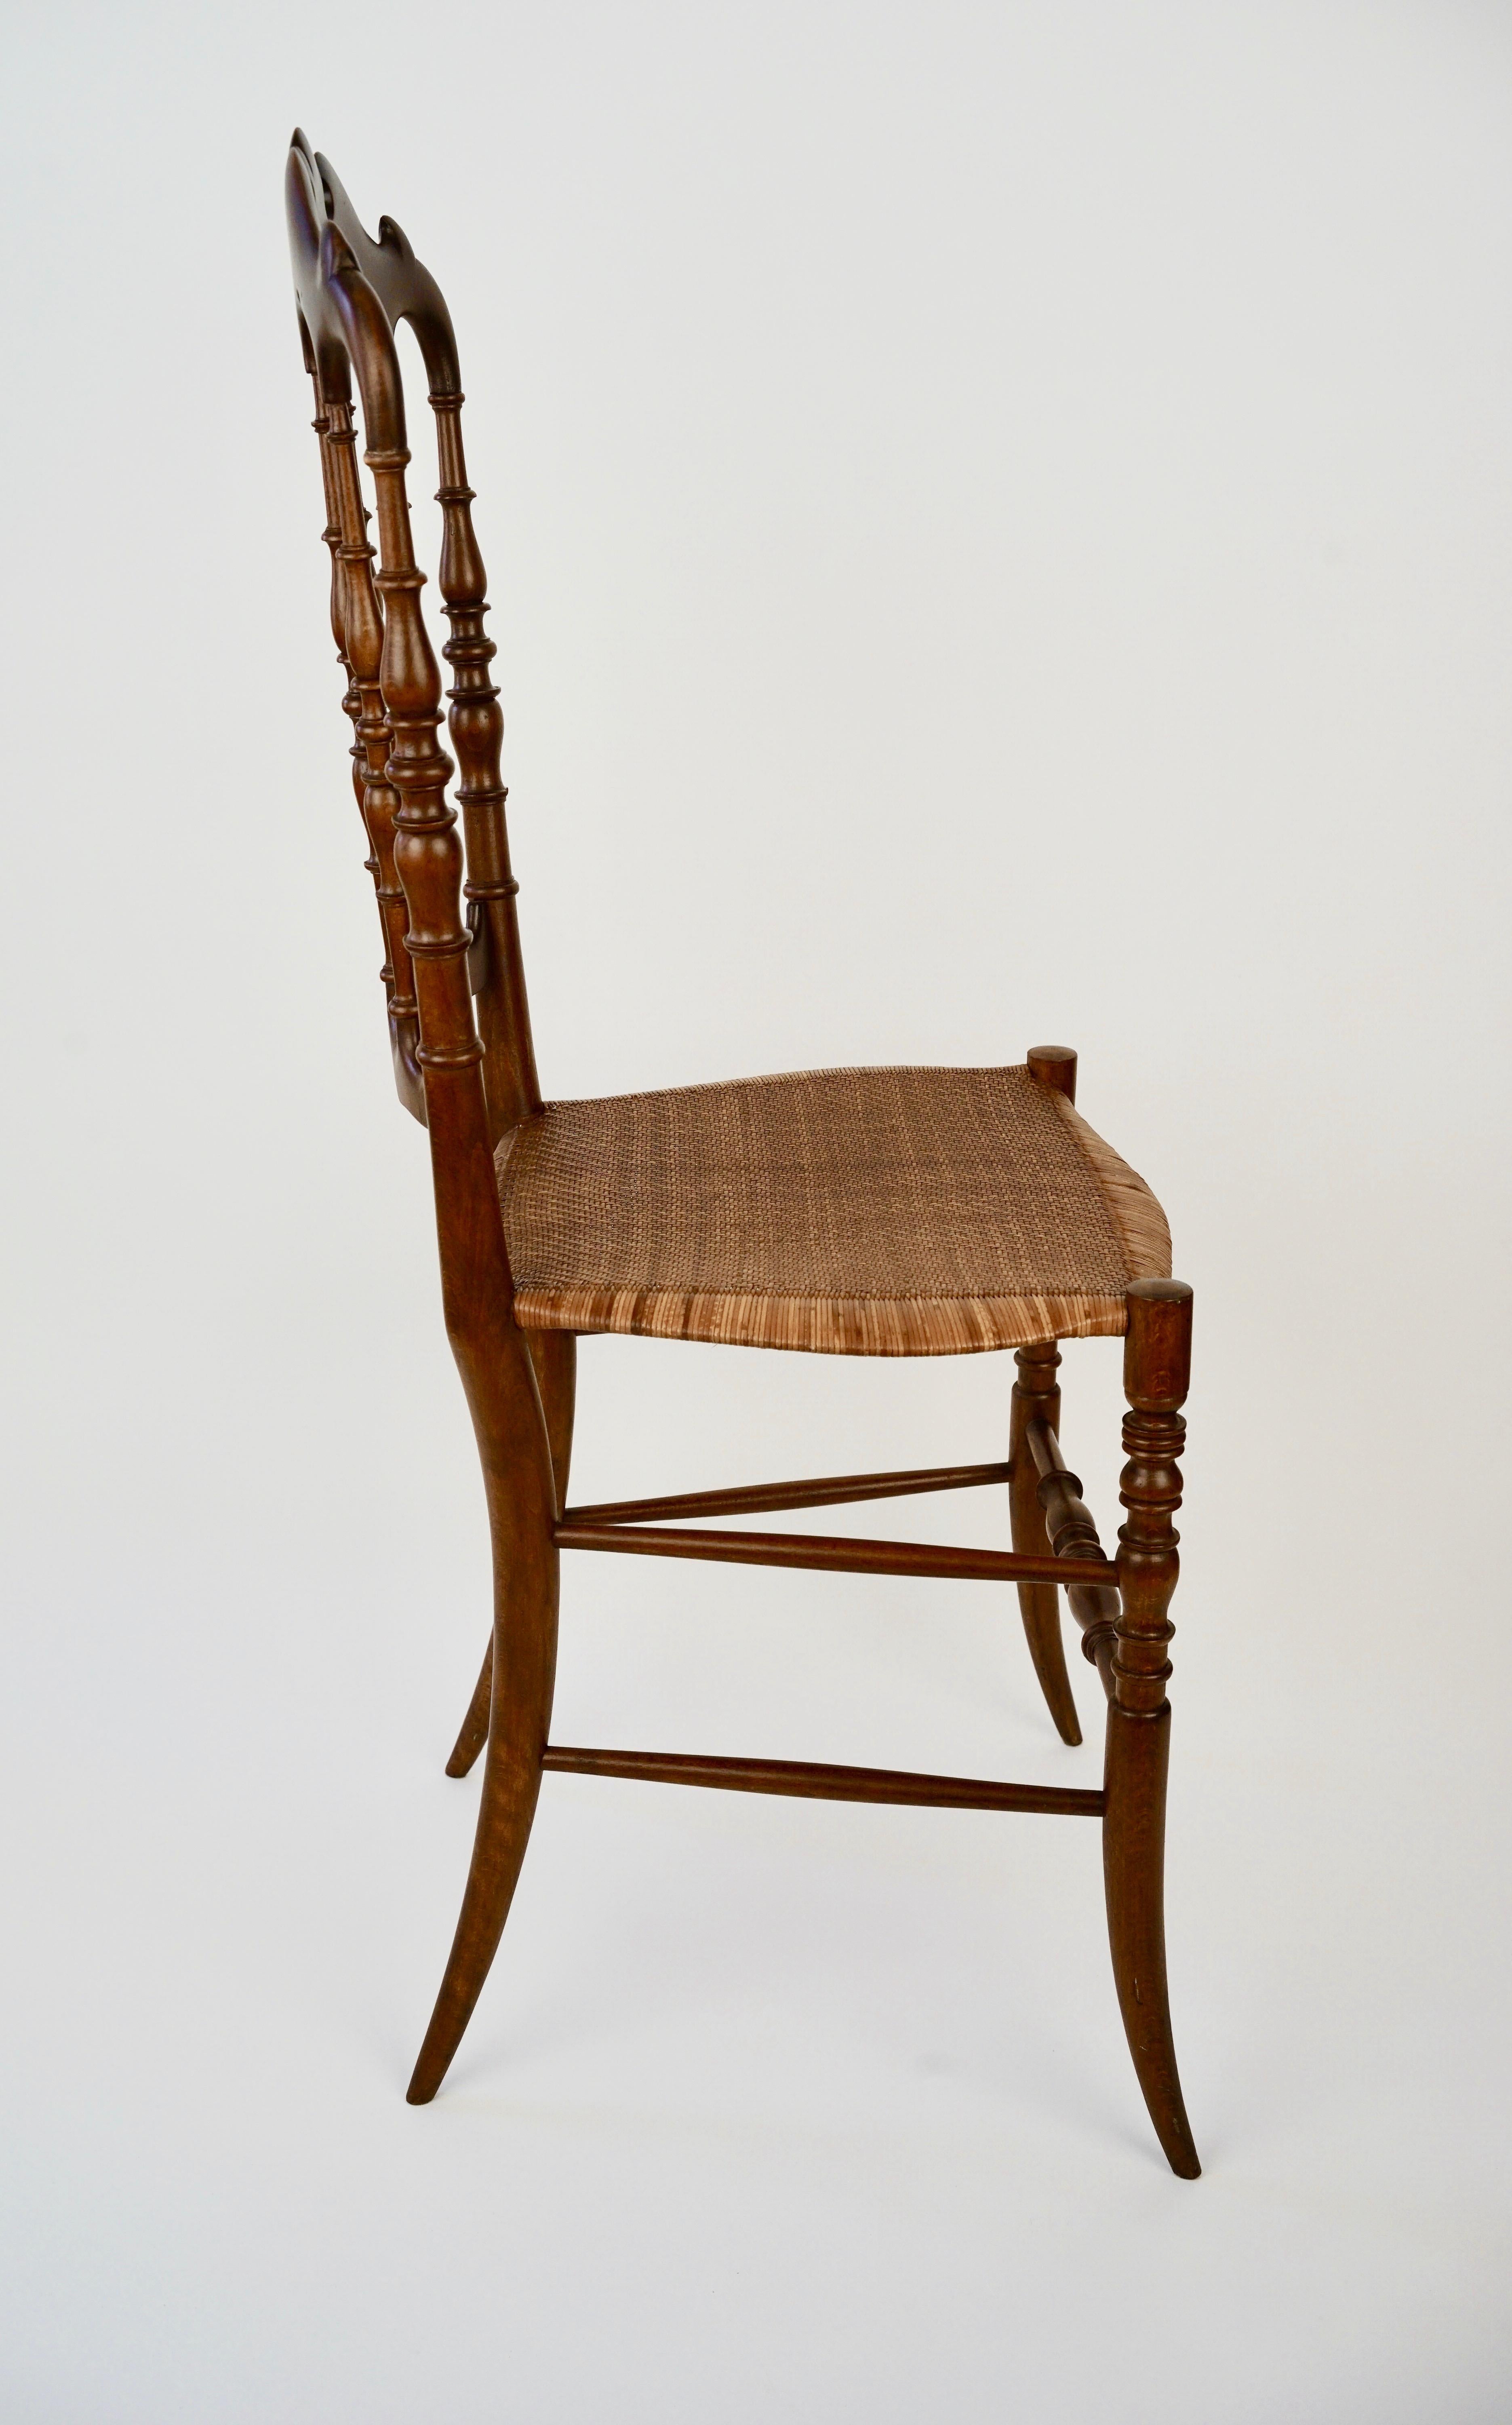 Italian Mid-Century Chiavari Chair, Model Parisienne, with Cane Seat